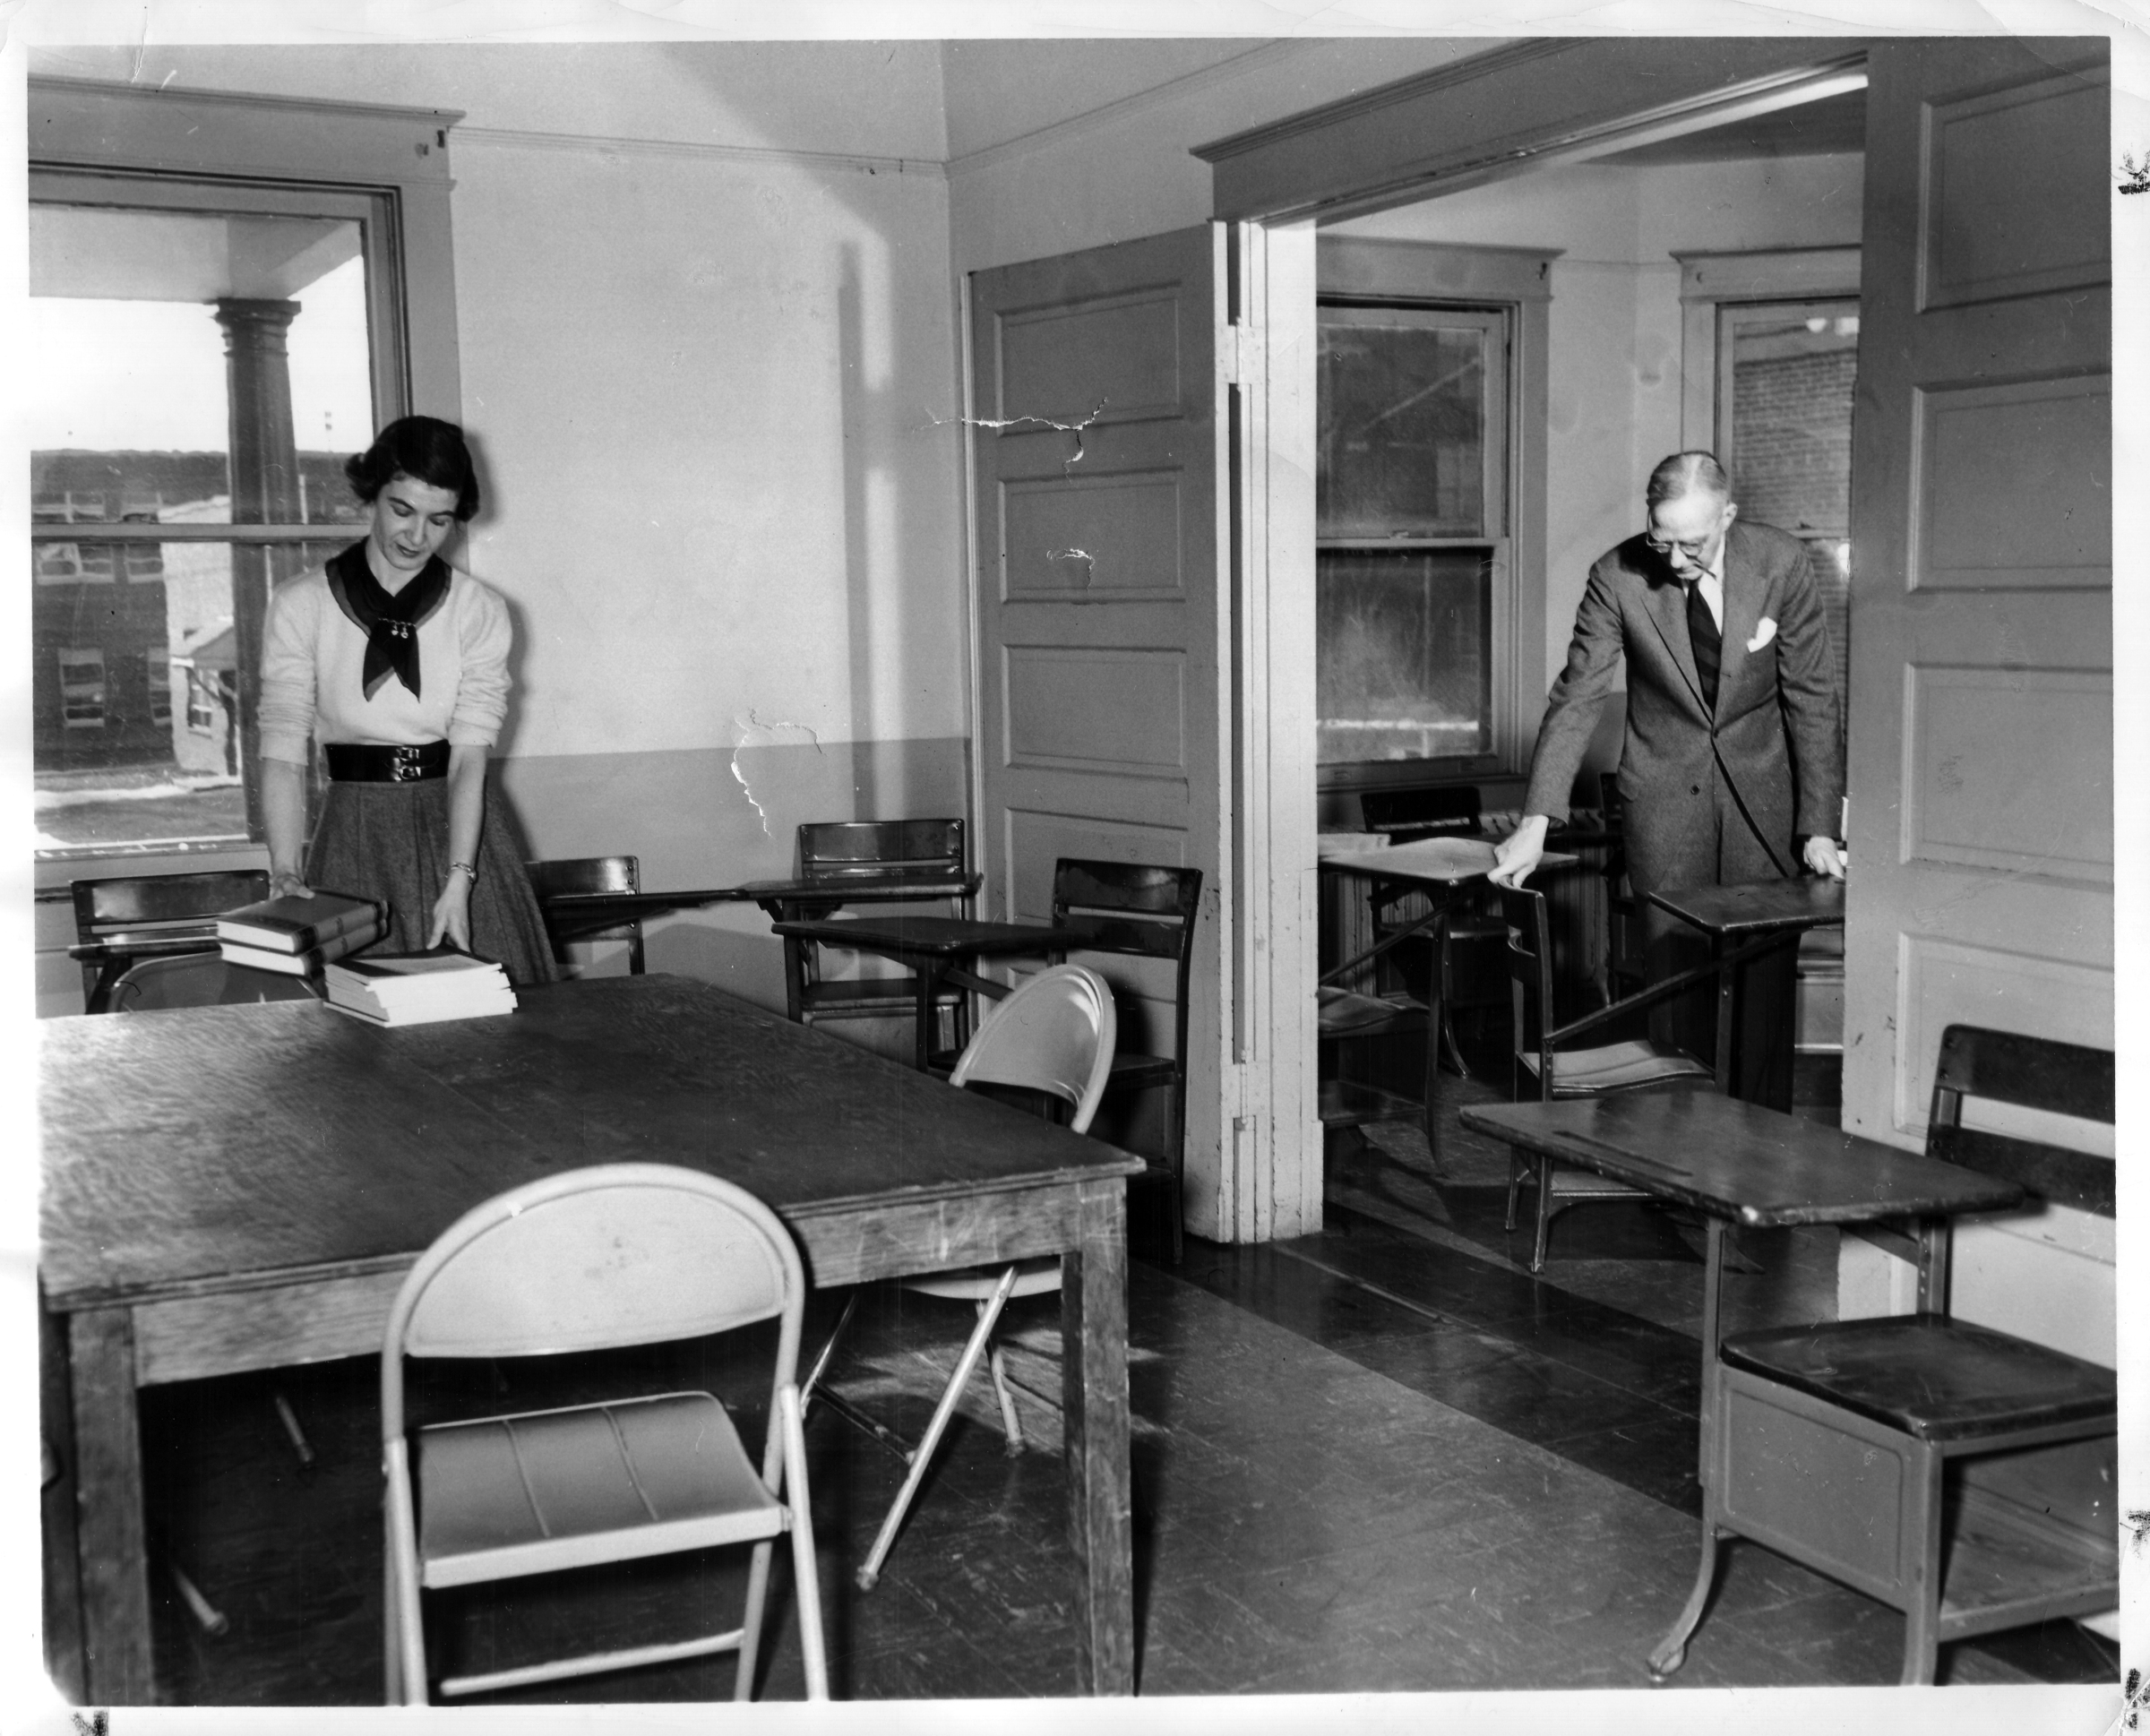 John Norville Gibson Finley and assistant set up desks in a classroom, Northern Virginia University Center, December 22, 1953.